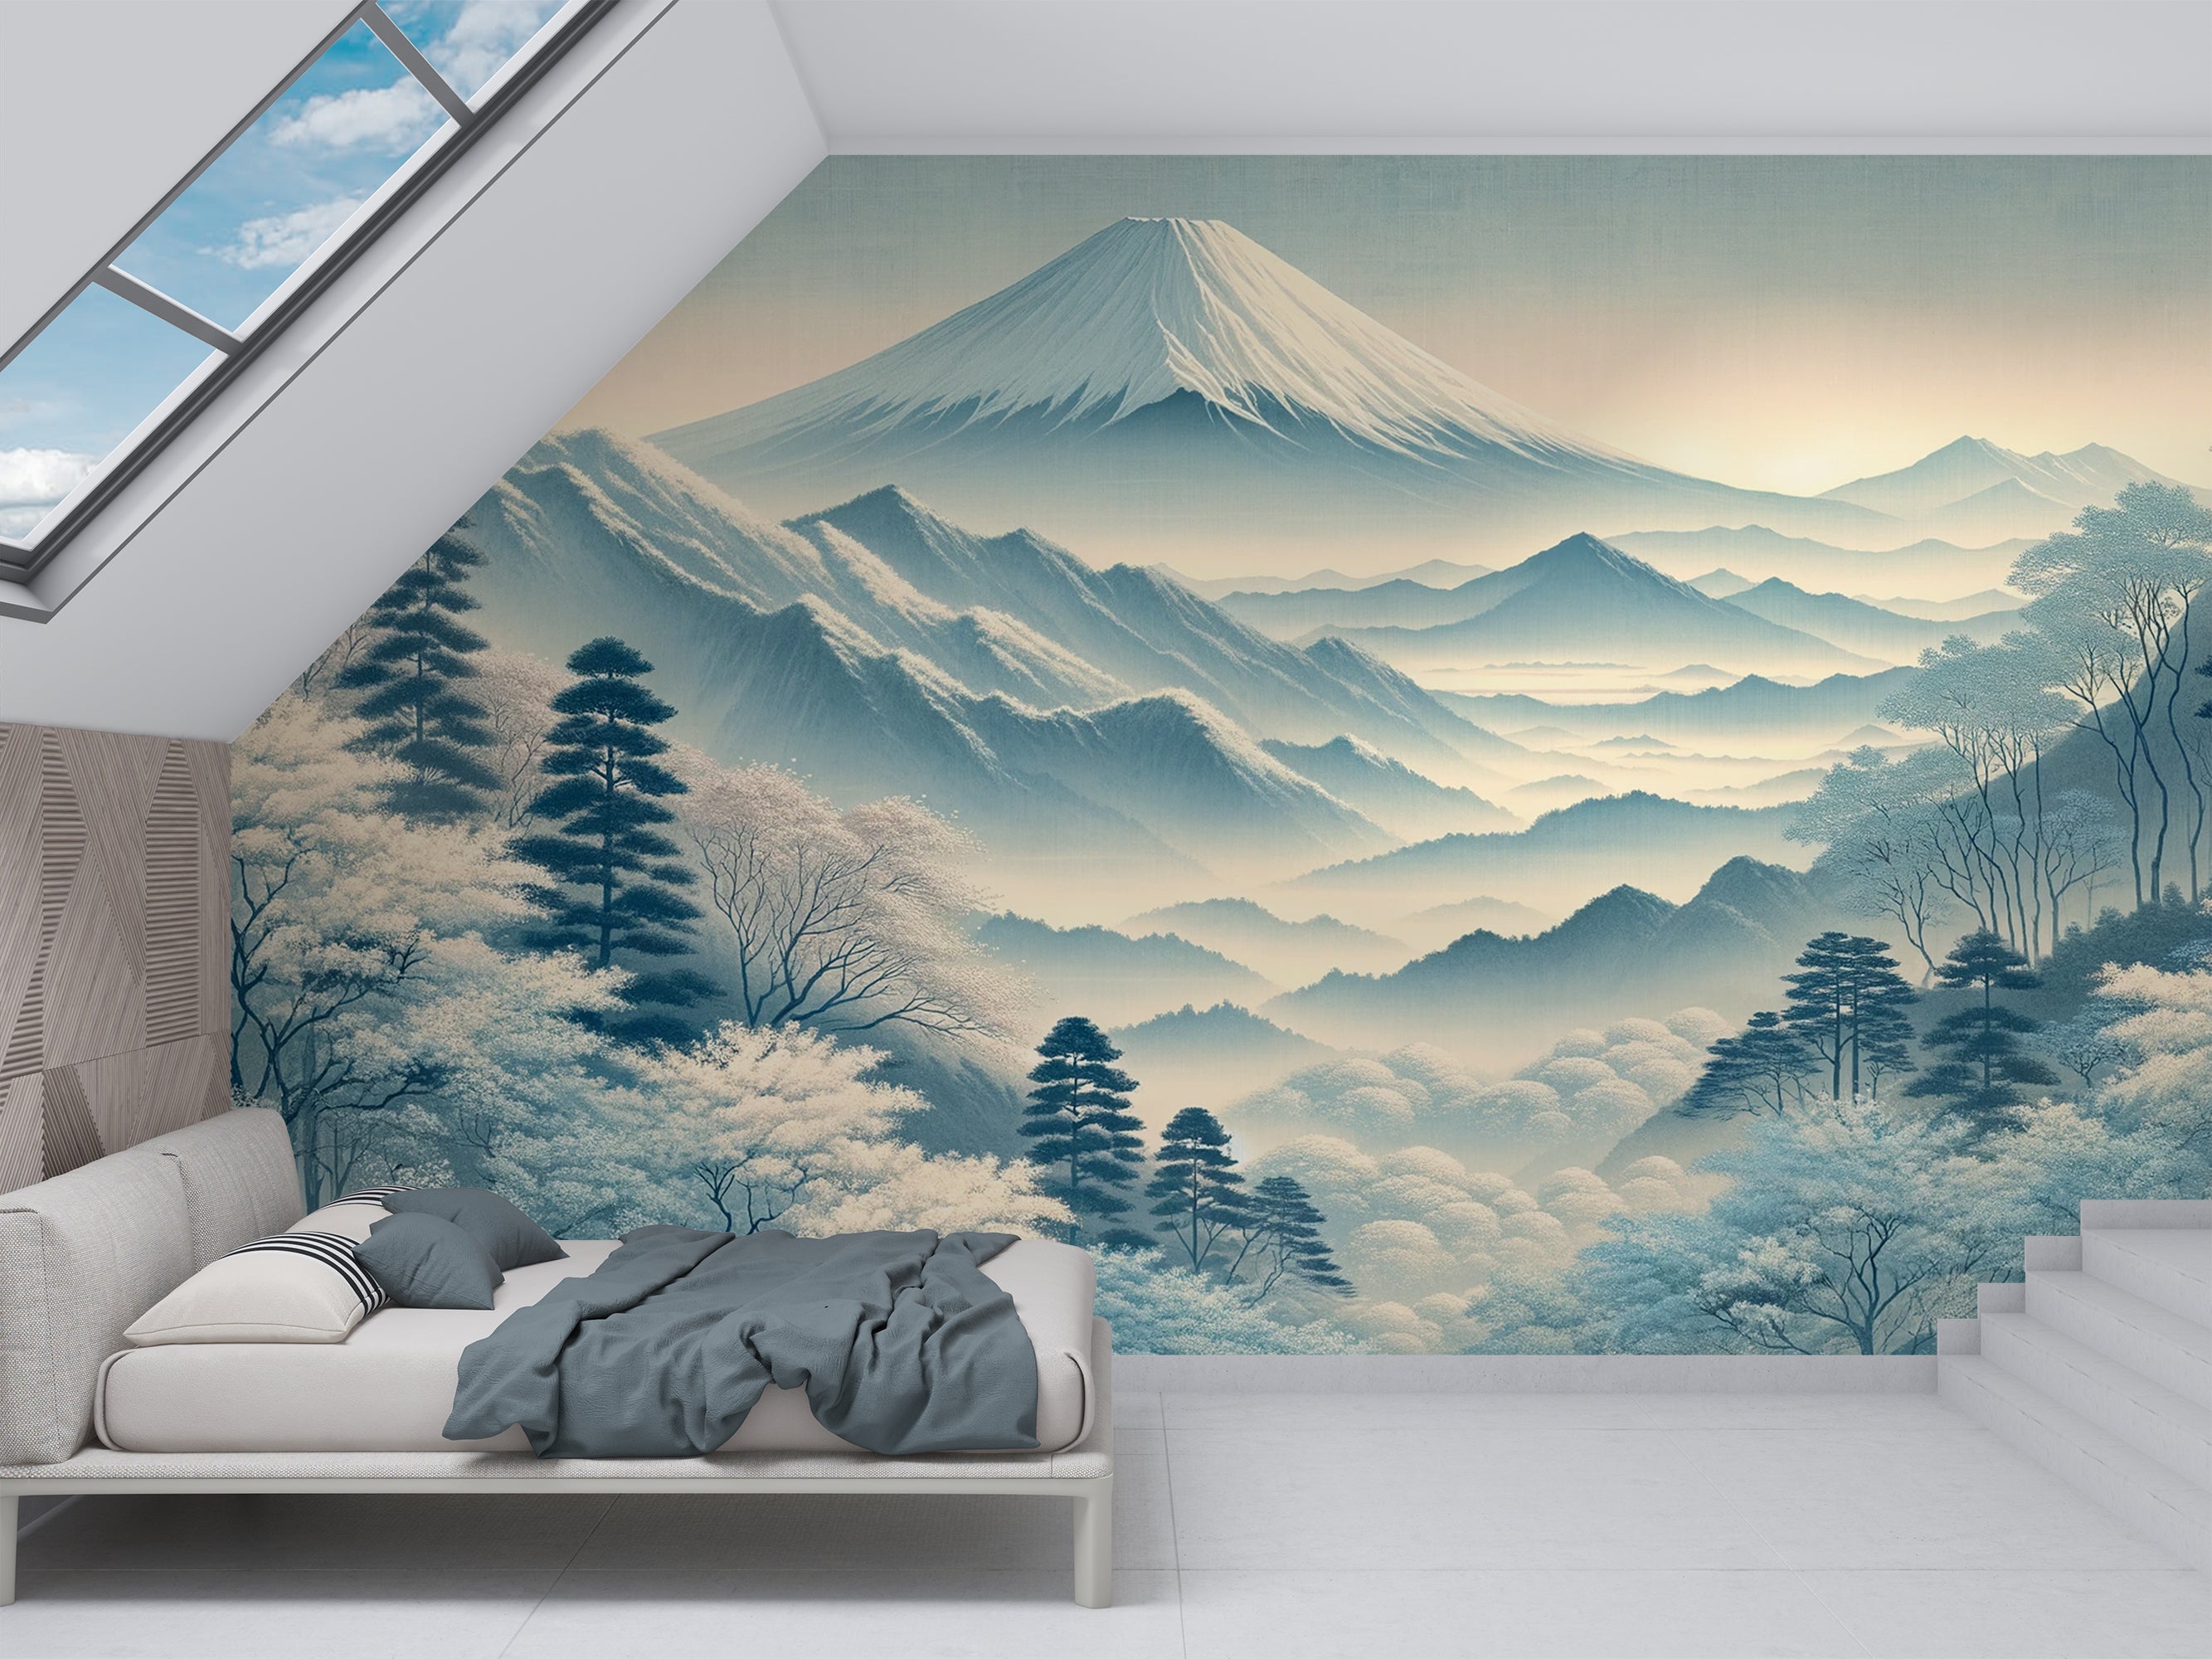 Mount Fuji - Asian serenity